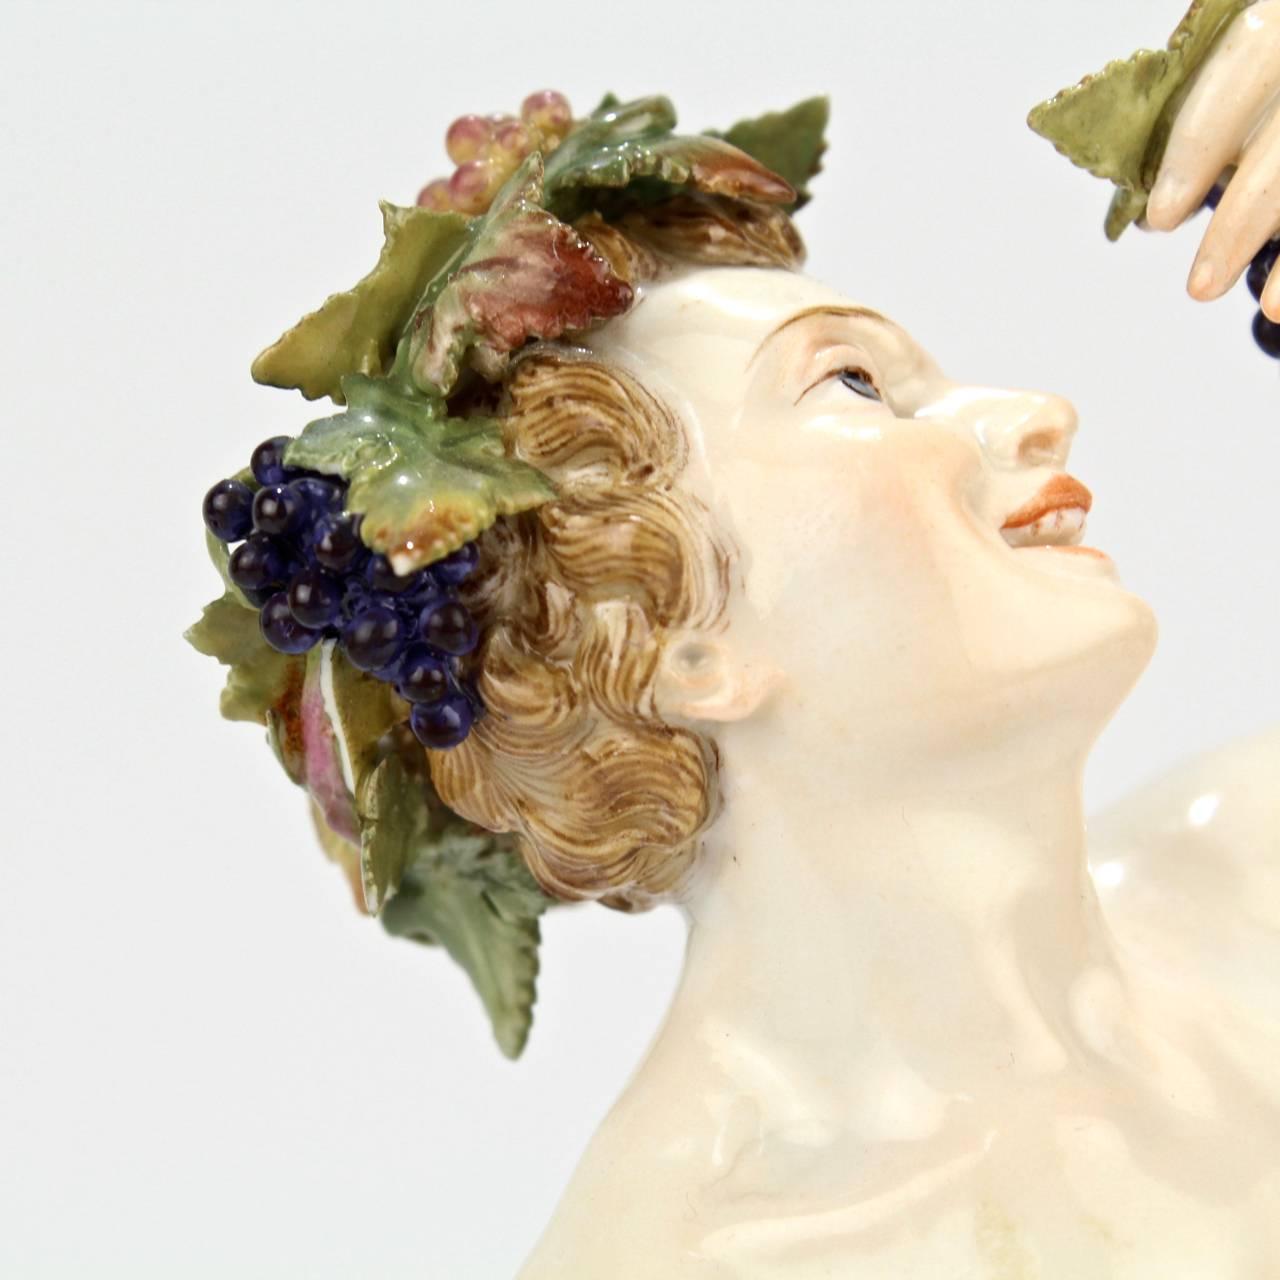 Antique Meissen Porcelain Allegorical Figurine of Bacchus the God of Wine 5